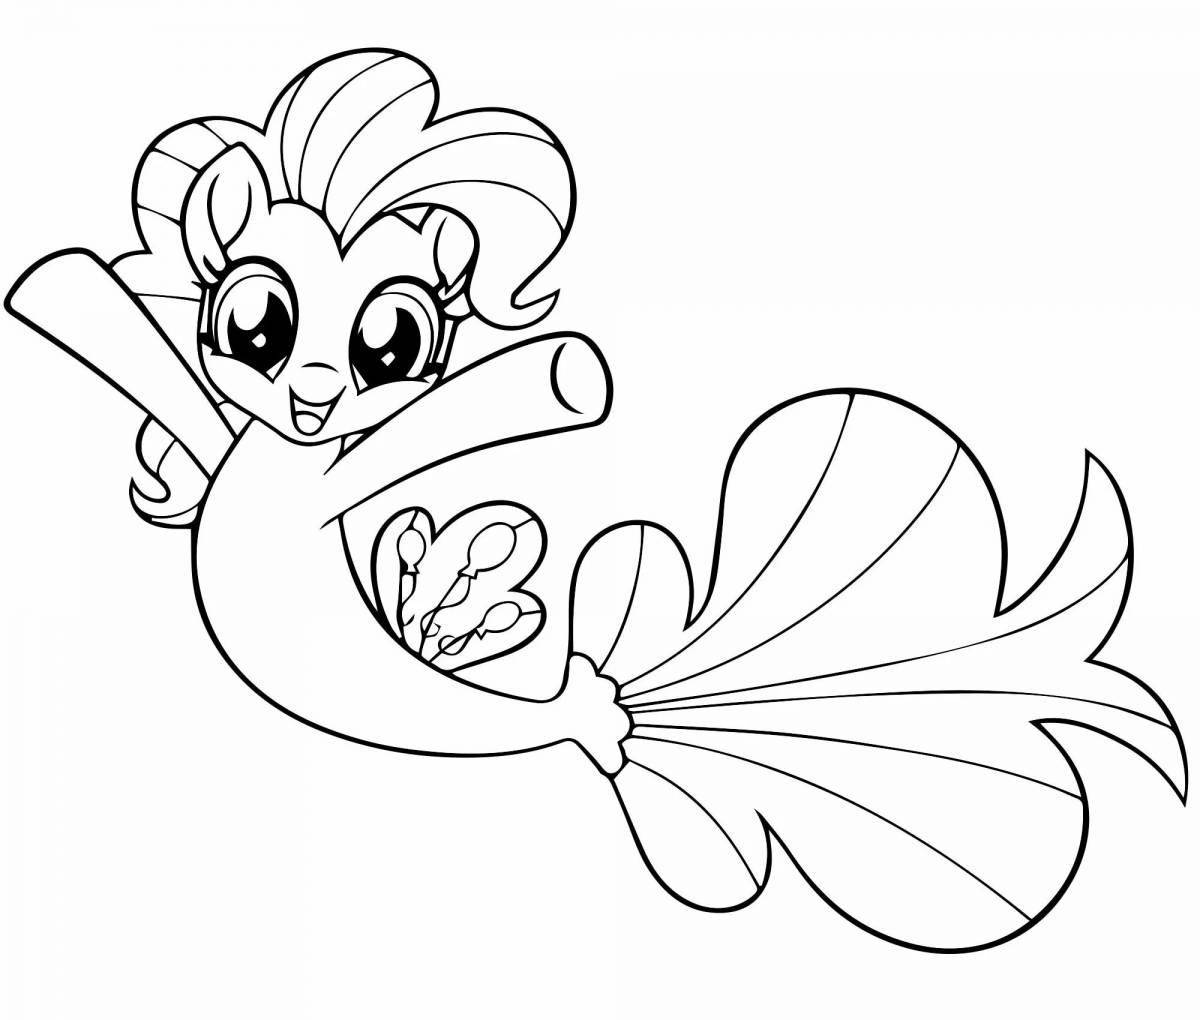 Malital pony mermaid coloring page